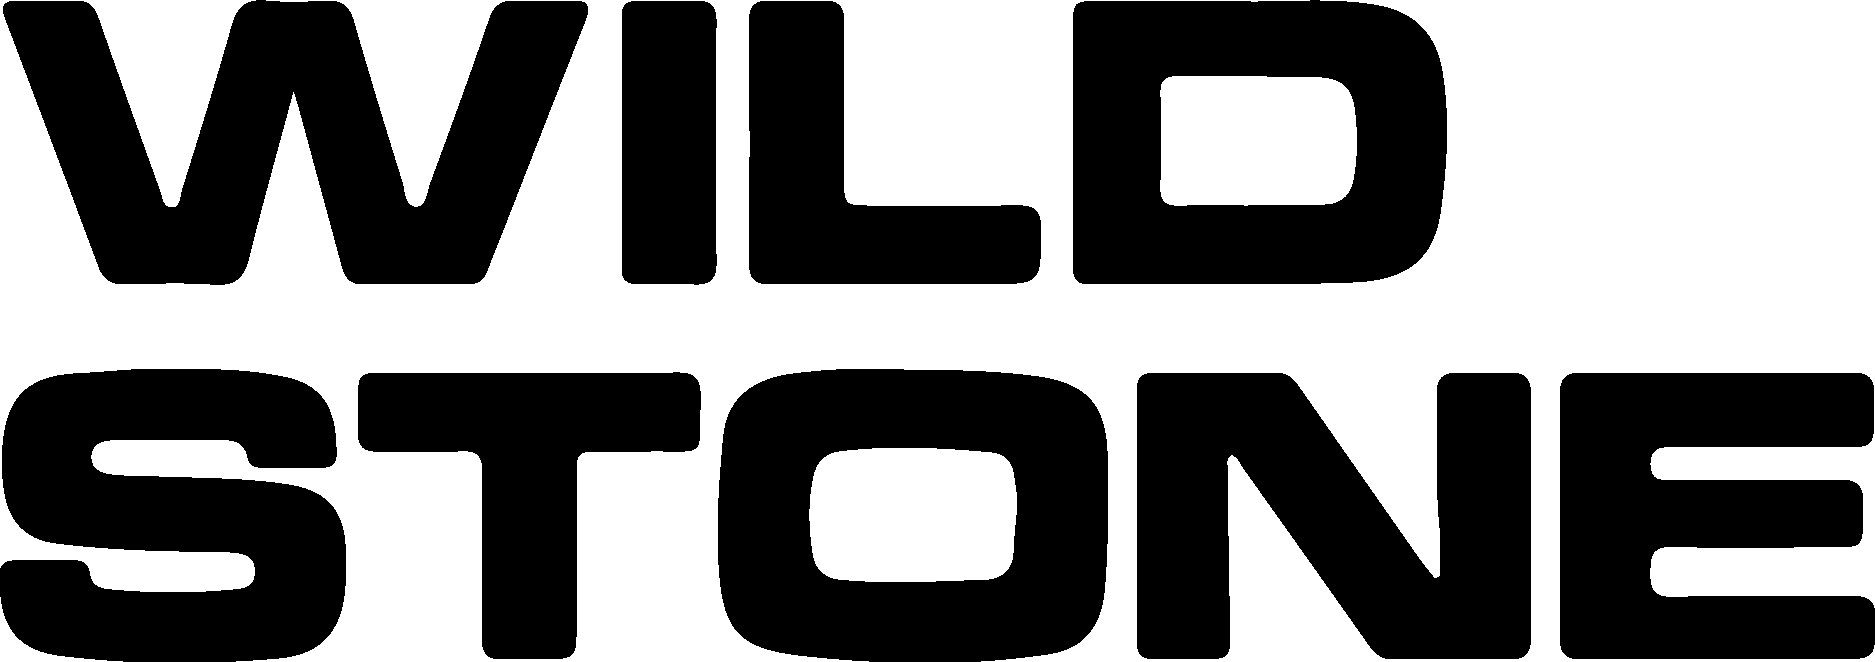 afinity logo pic